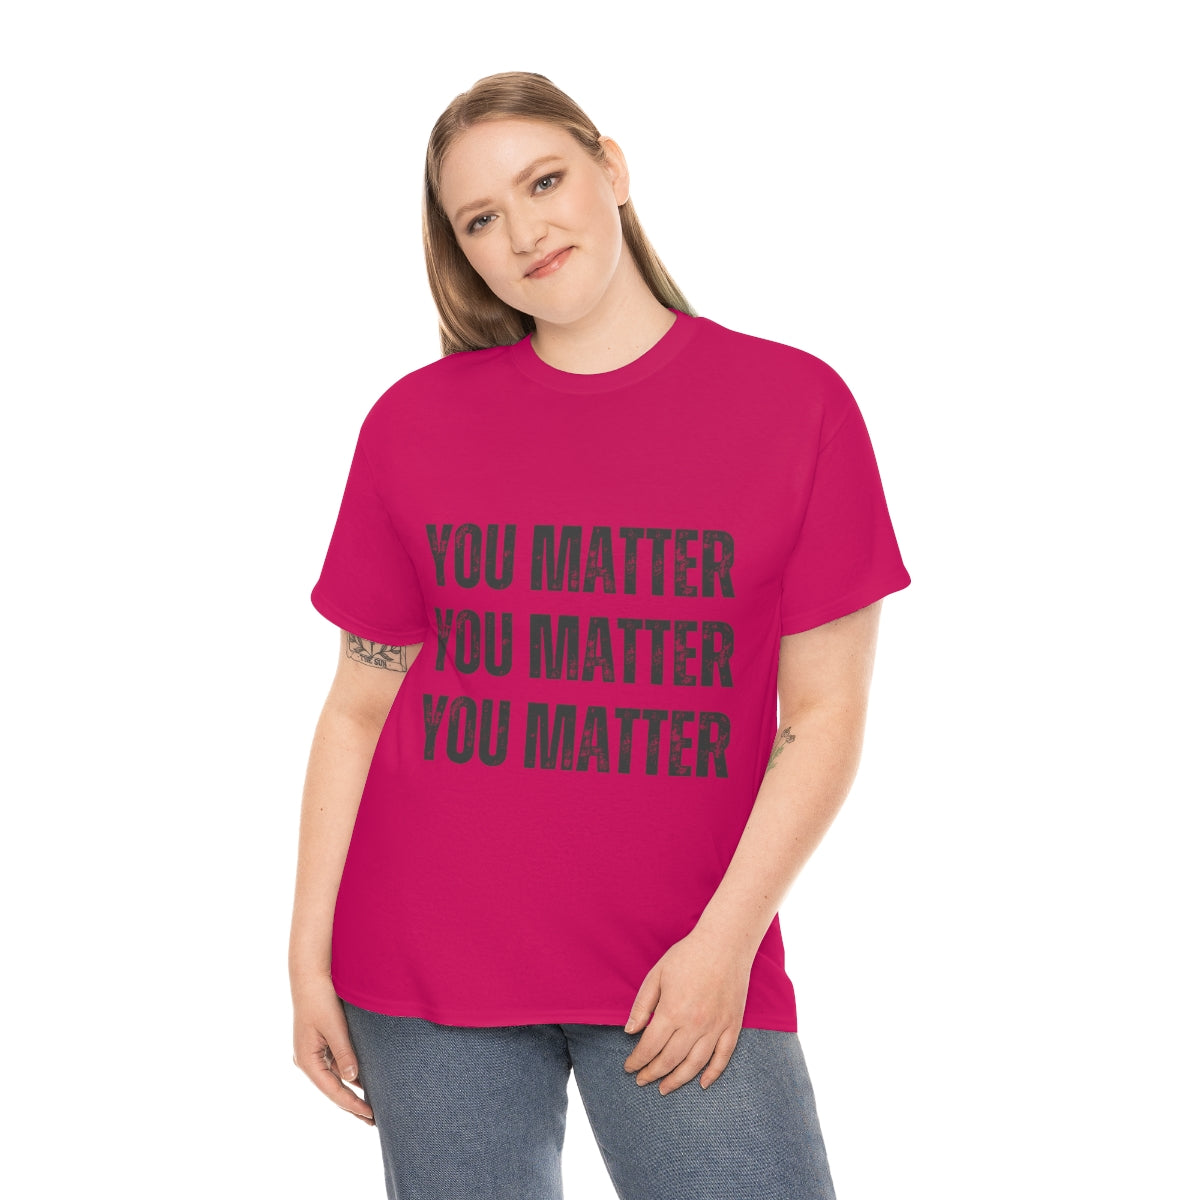 You Matter X3 Tee